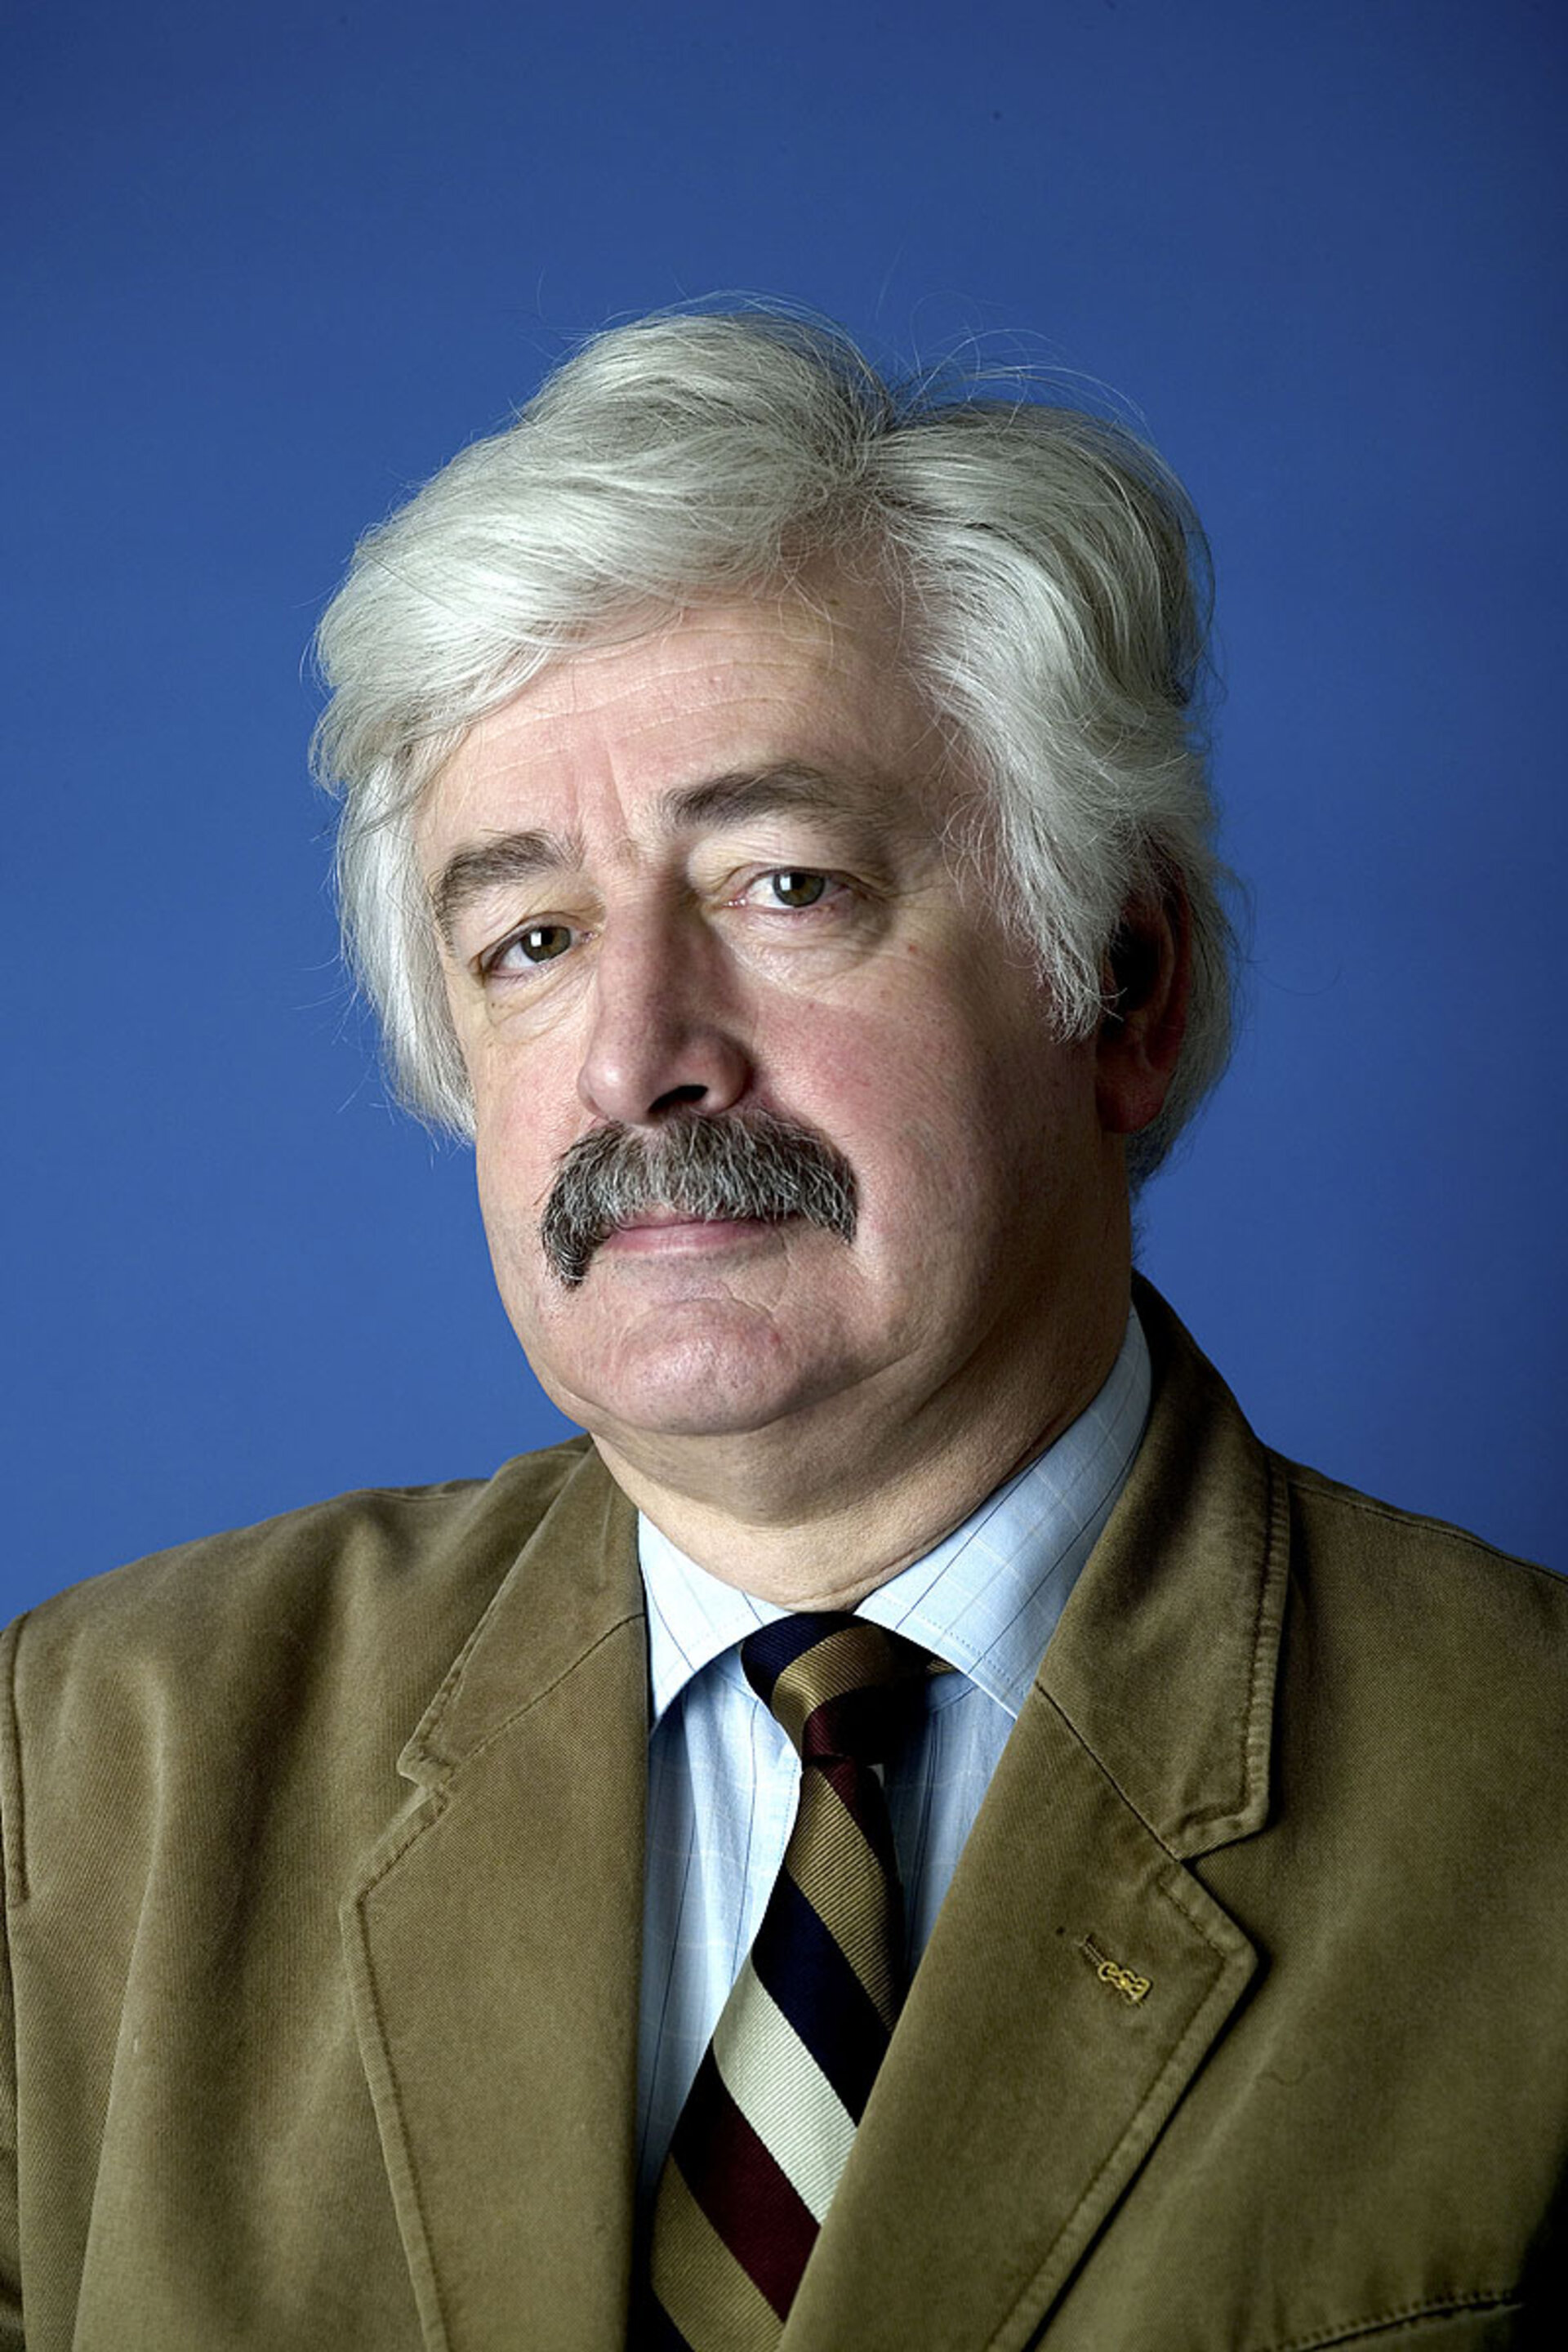 David Southwood, ESA's Director of Science